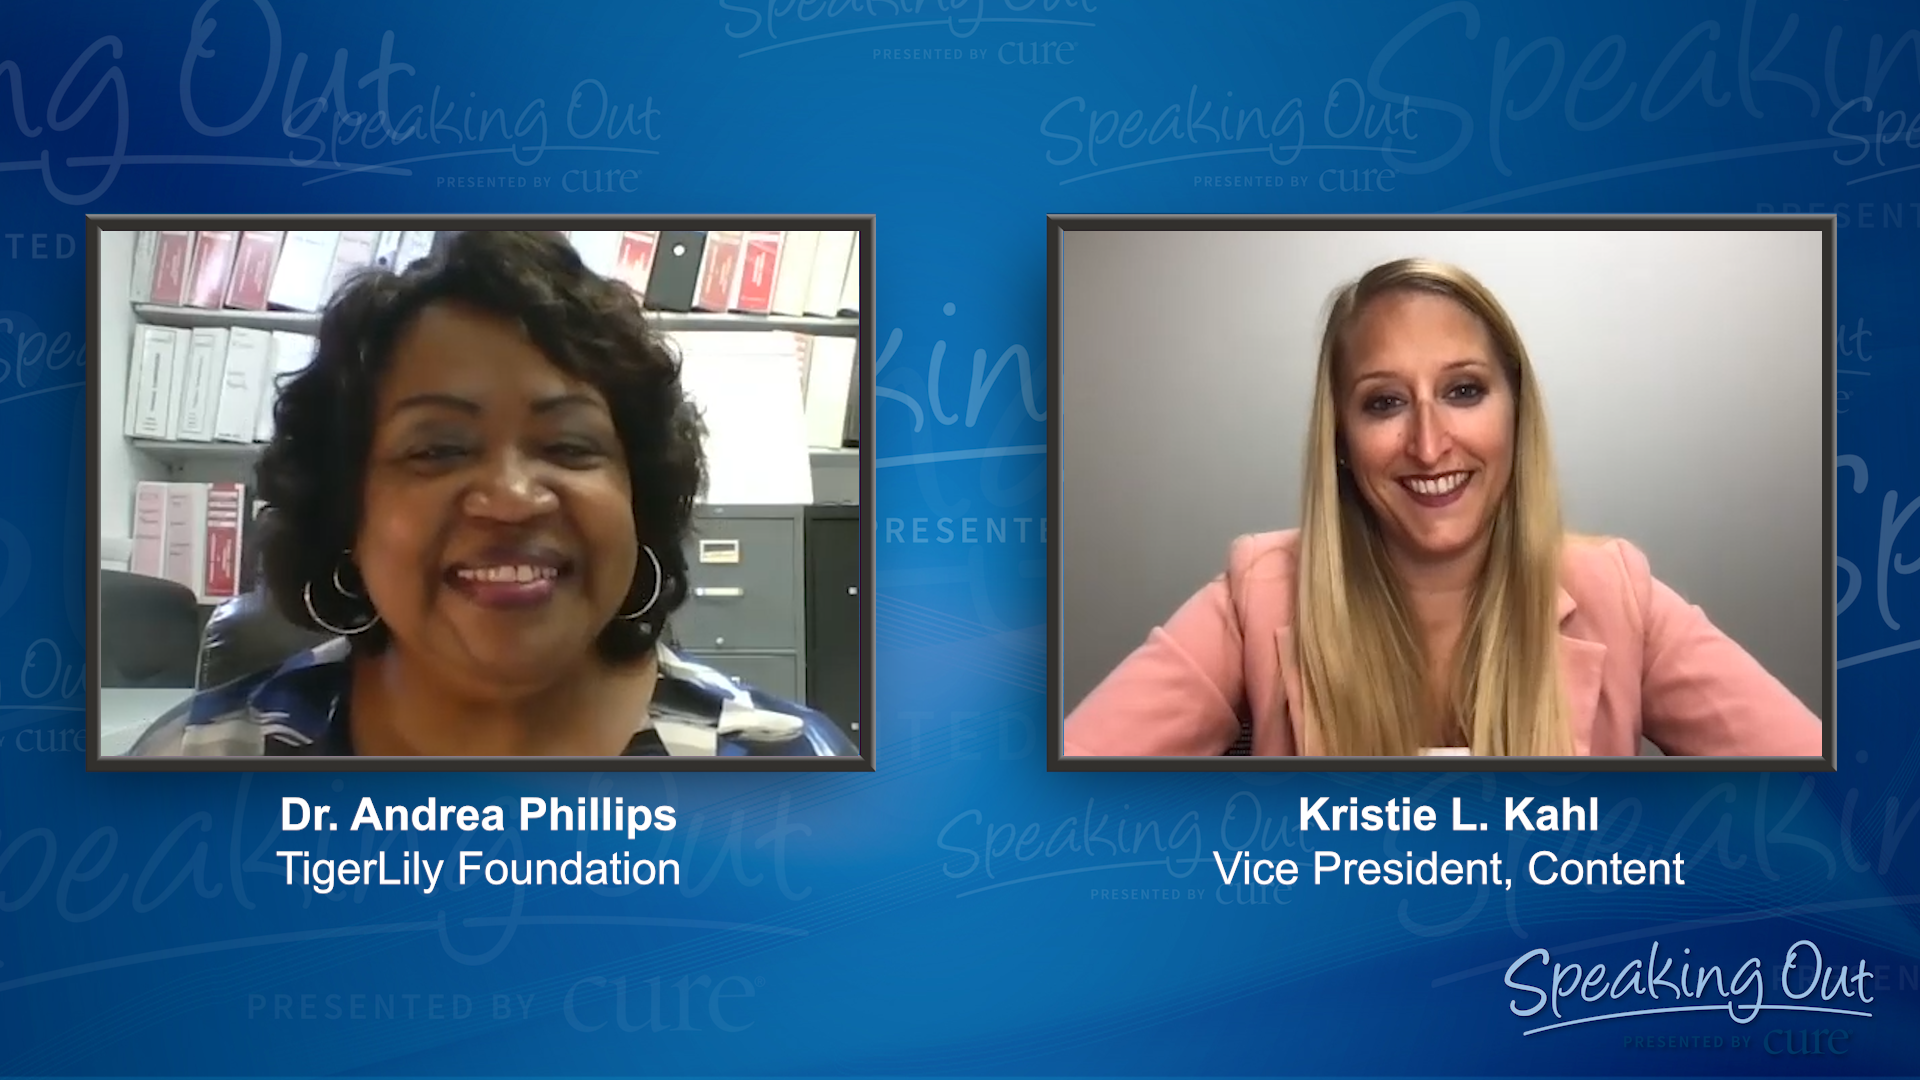 Kristie L. Kahl and Dr. Andrea Phillips: 